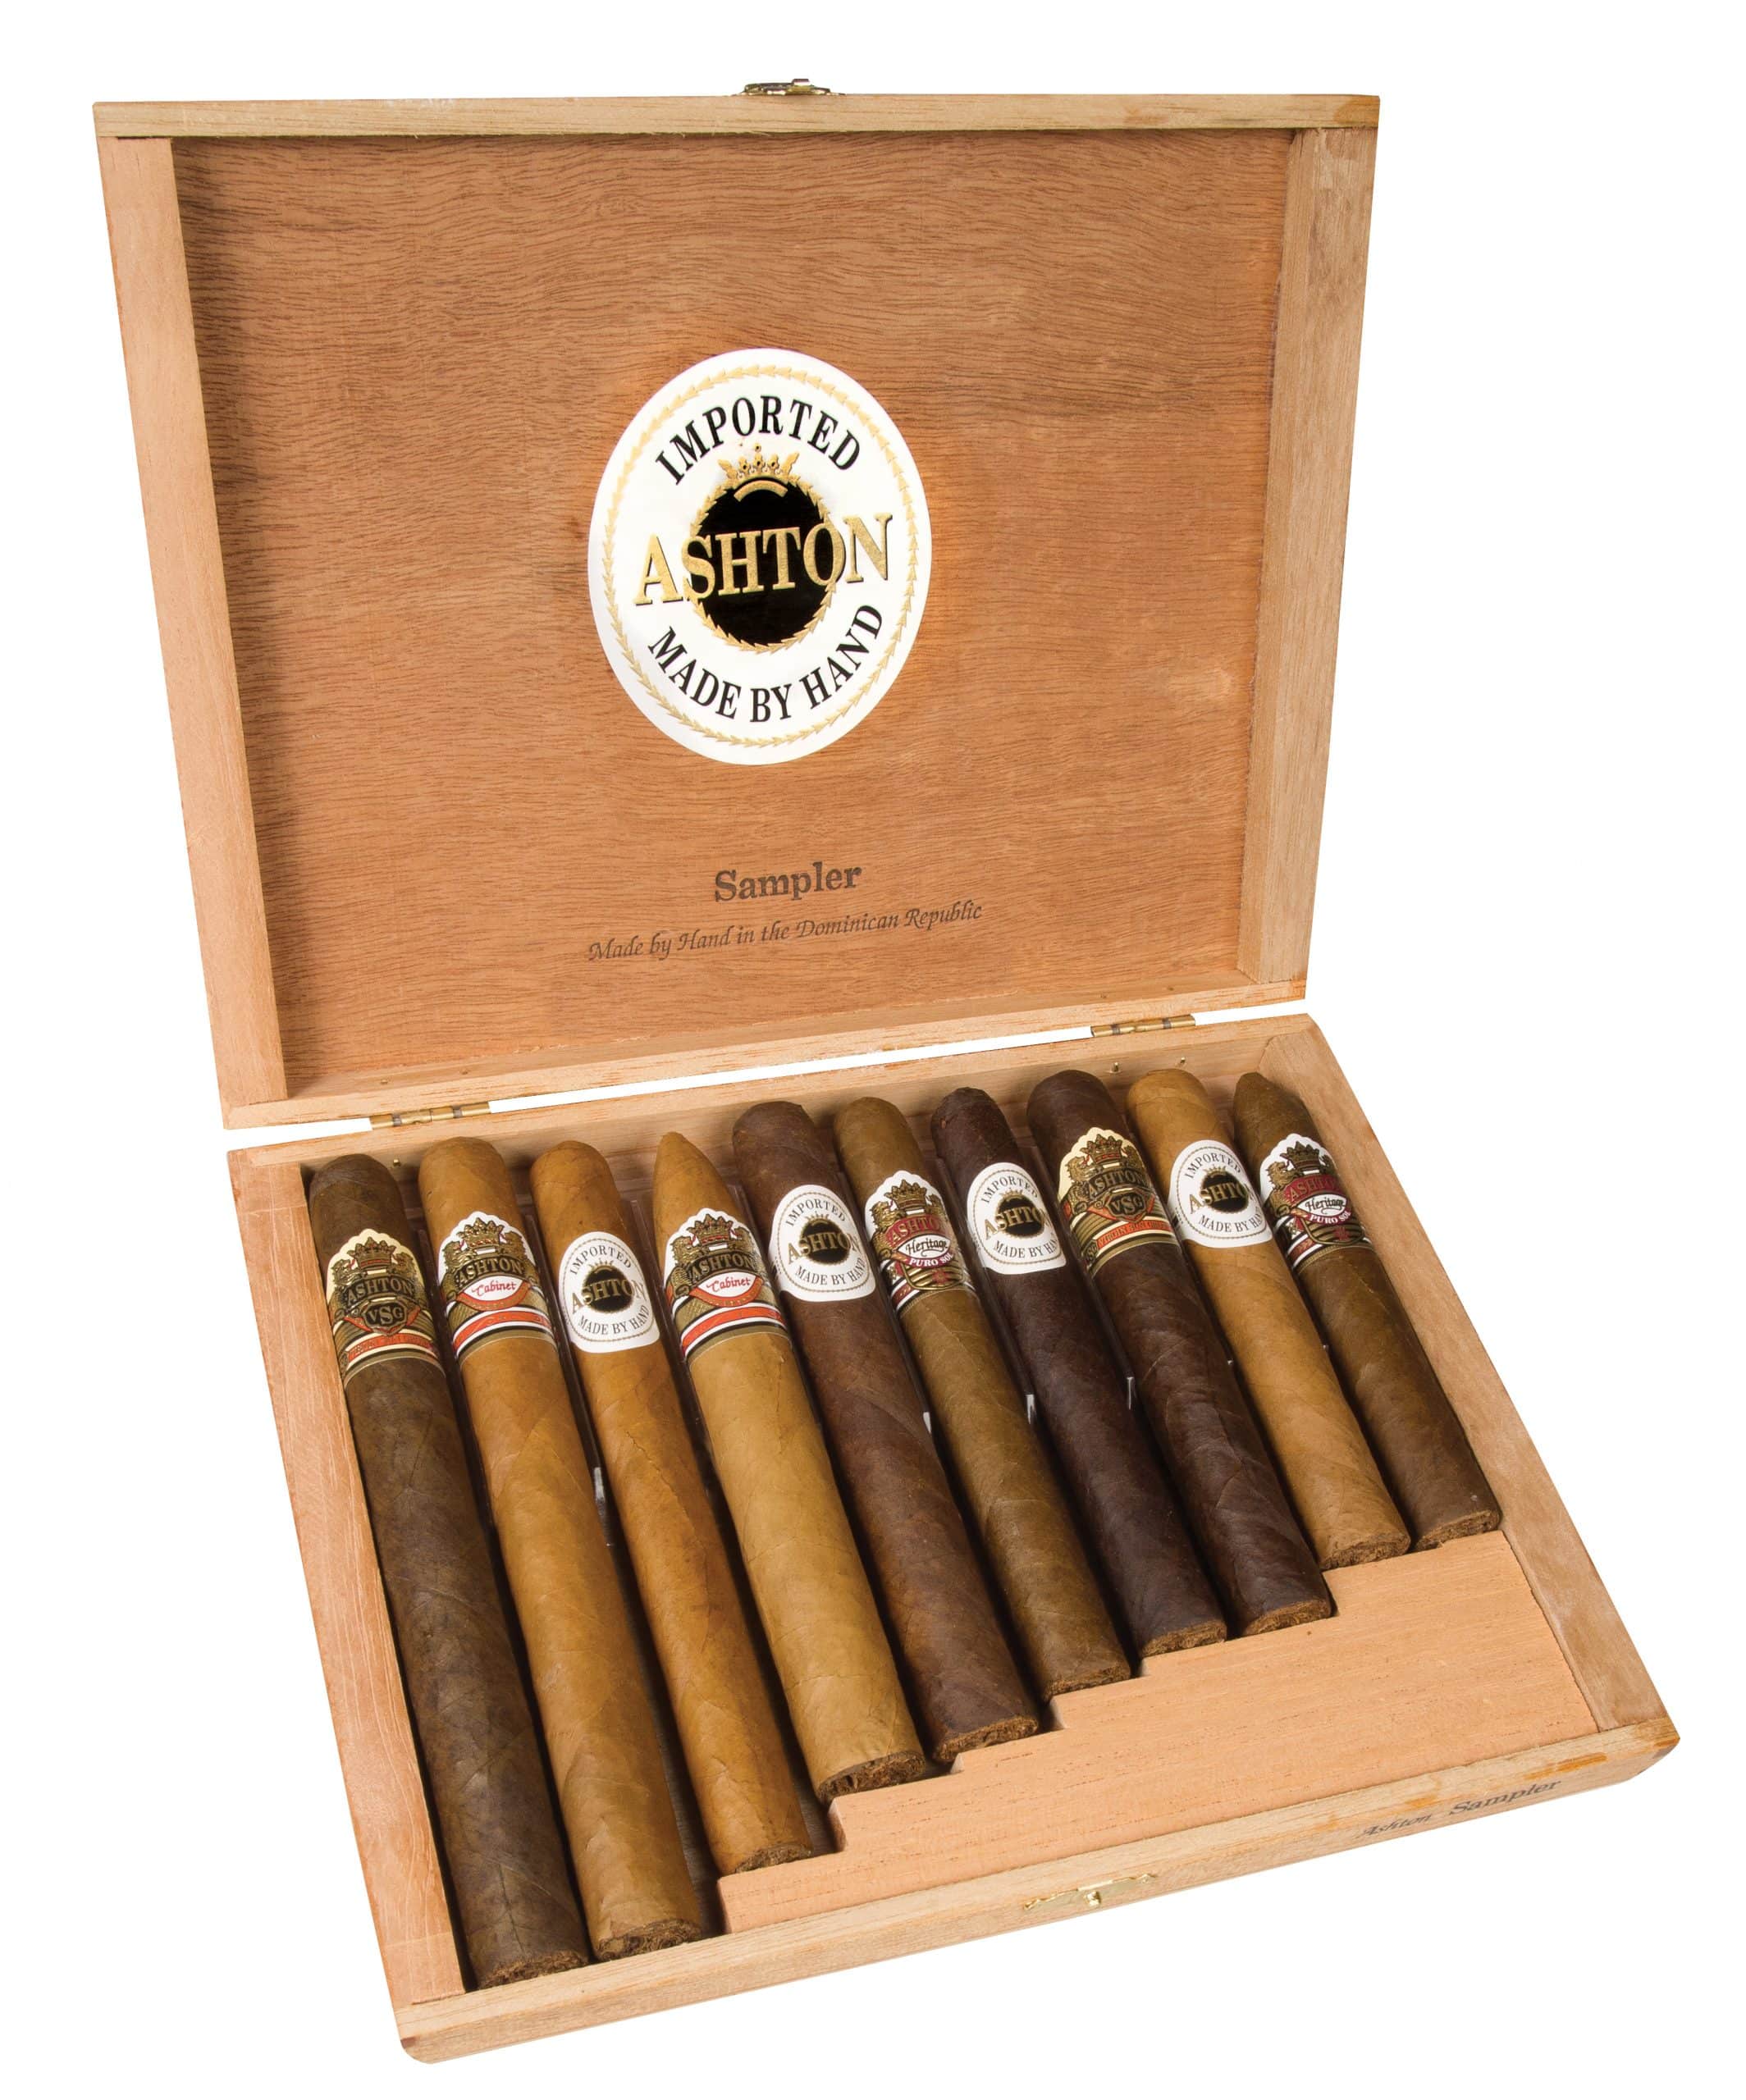 Open box of Ashton 10 count Cigar Sampler with varying sizes